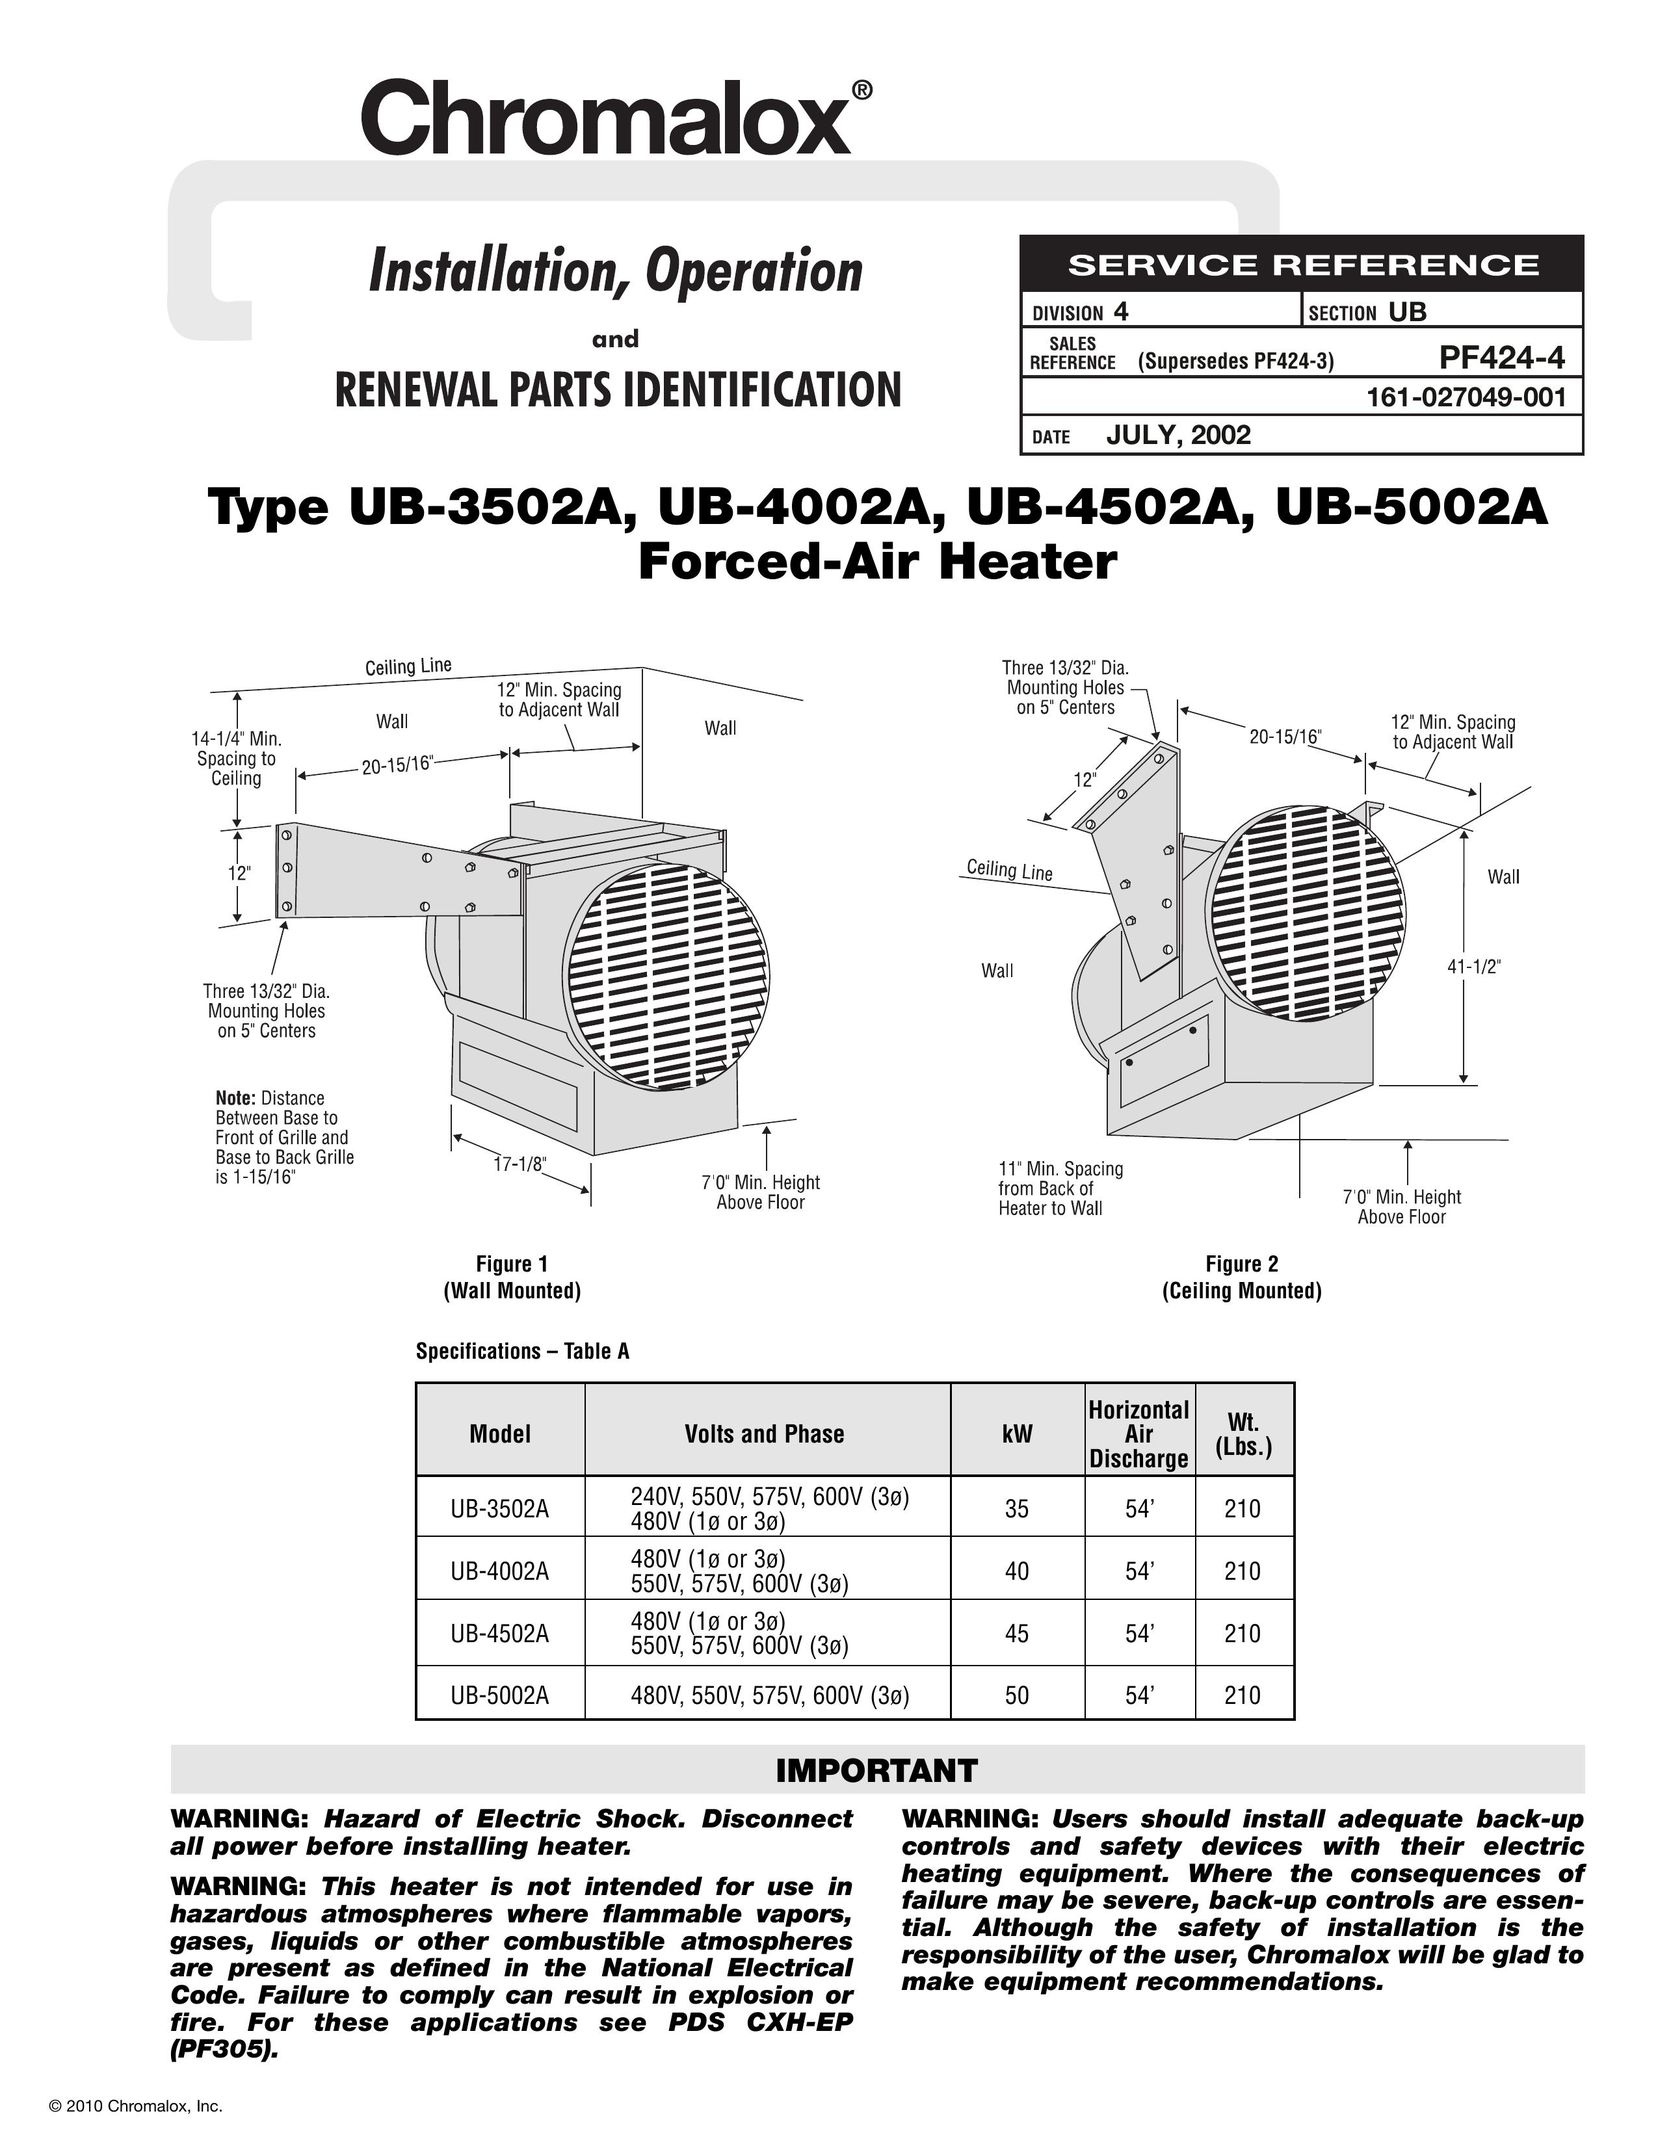 Chromalox UB-4002A Air Conditioner User Manual